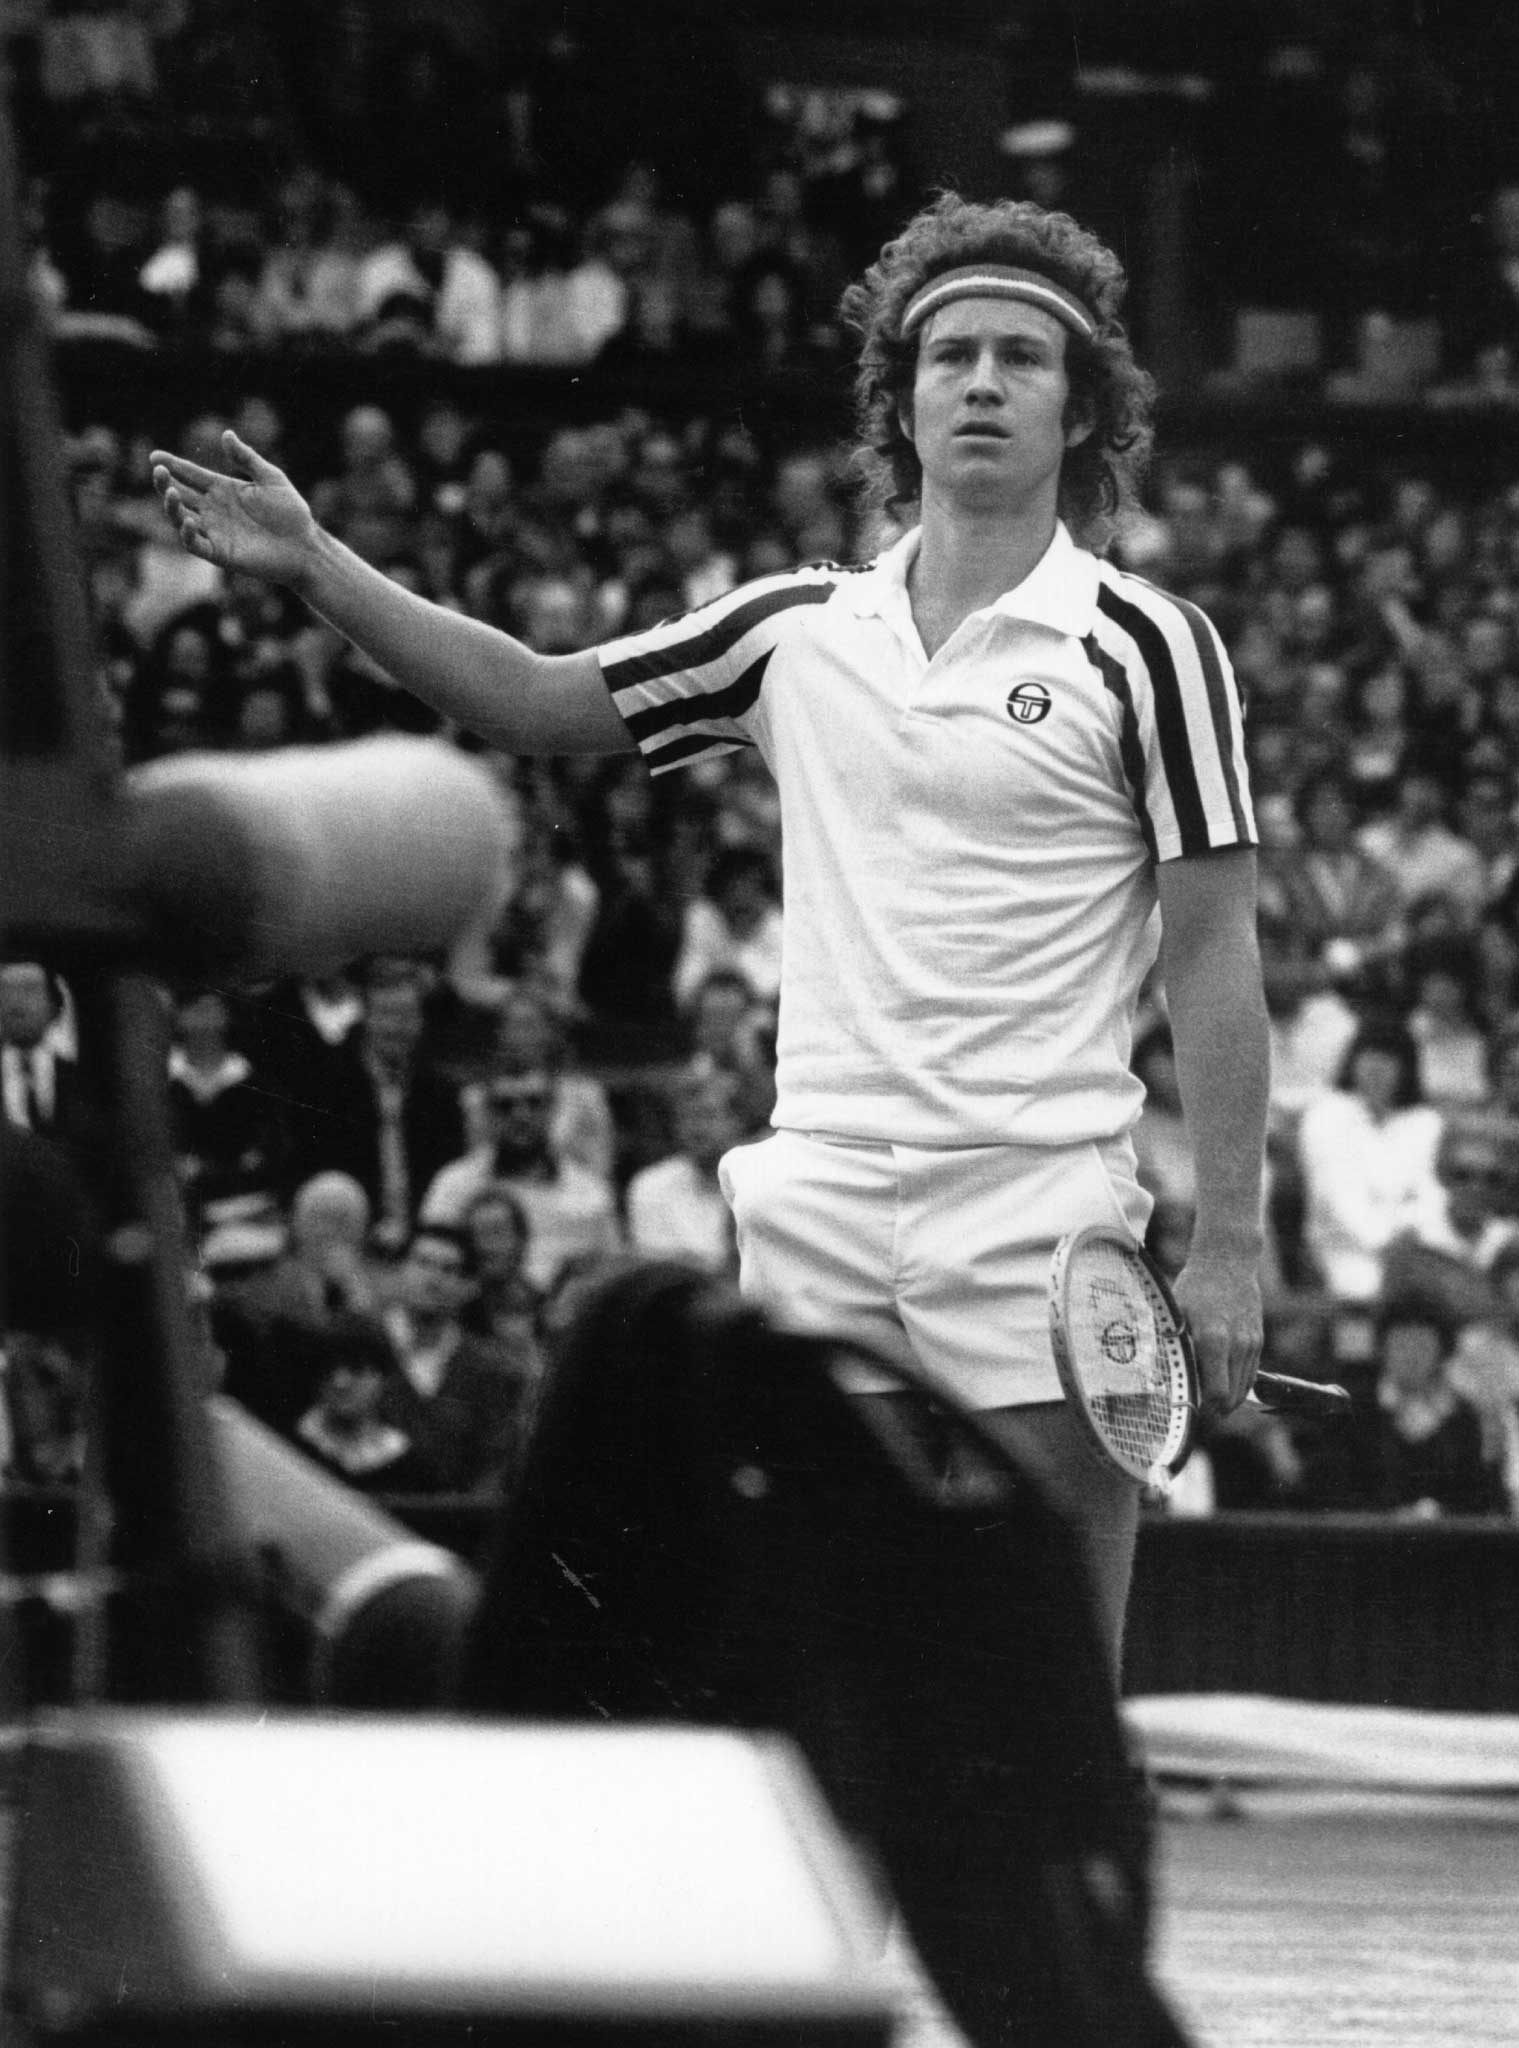 Yes he's serious: John McEnroe disputing an umpire's call, July 1980